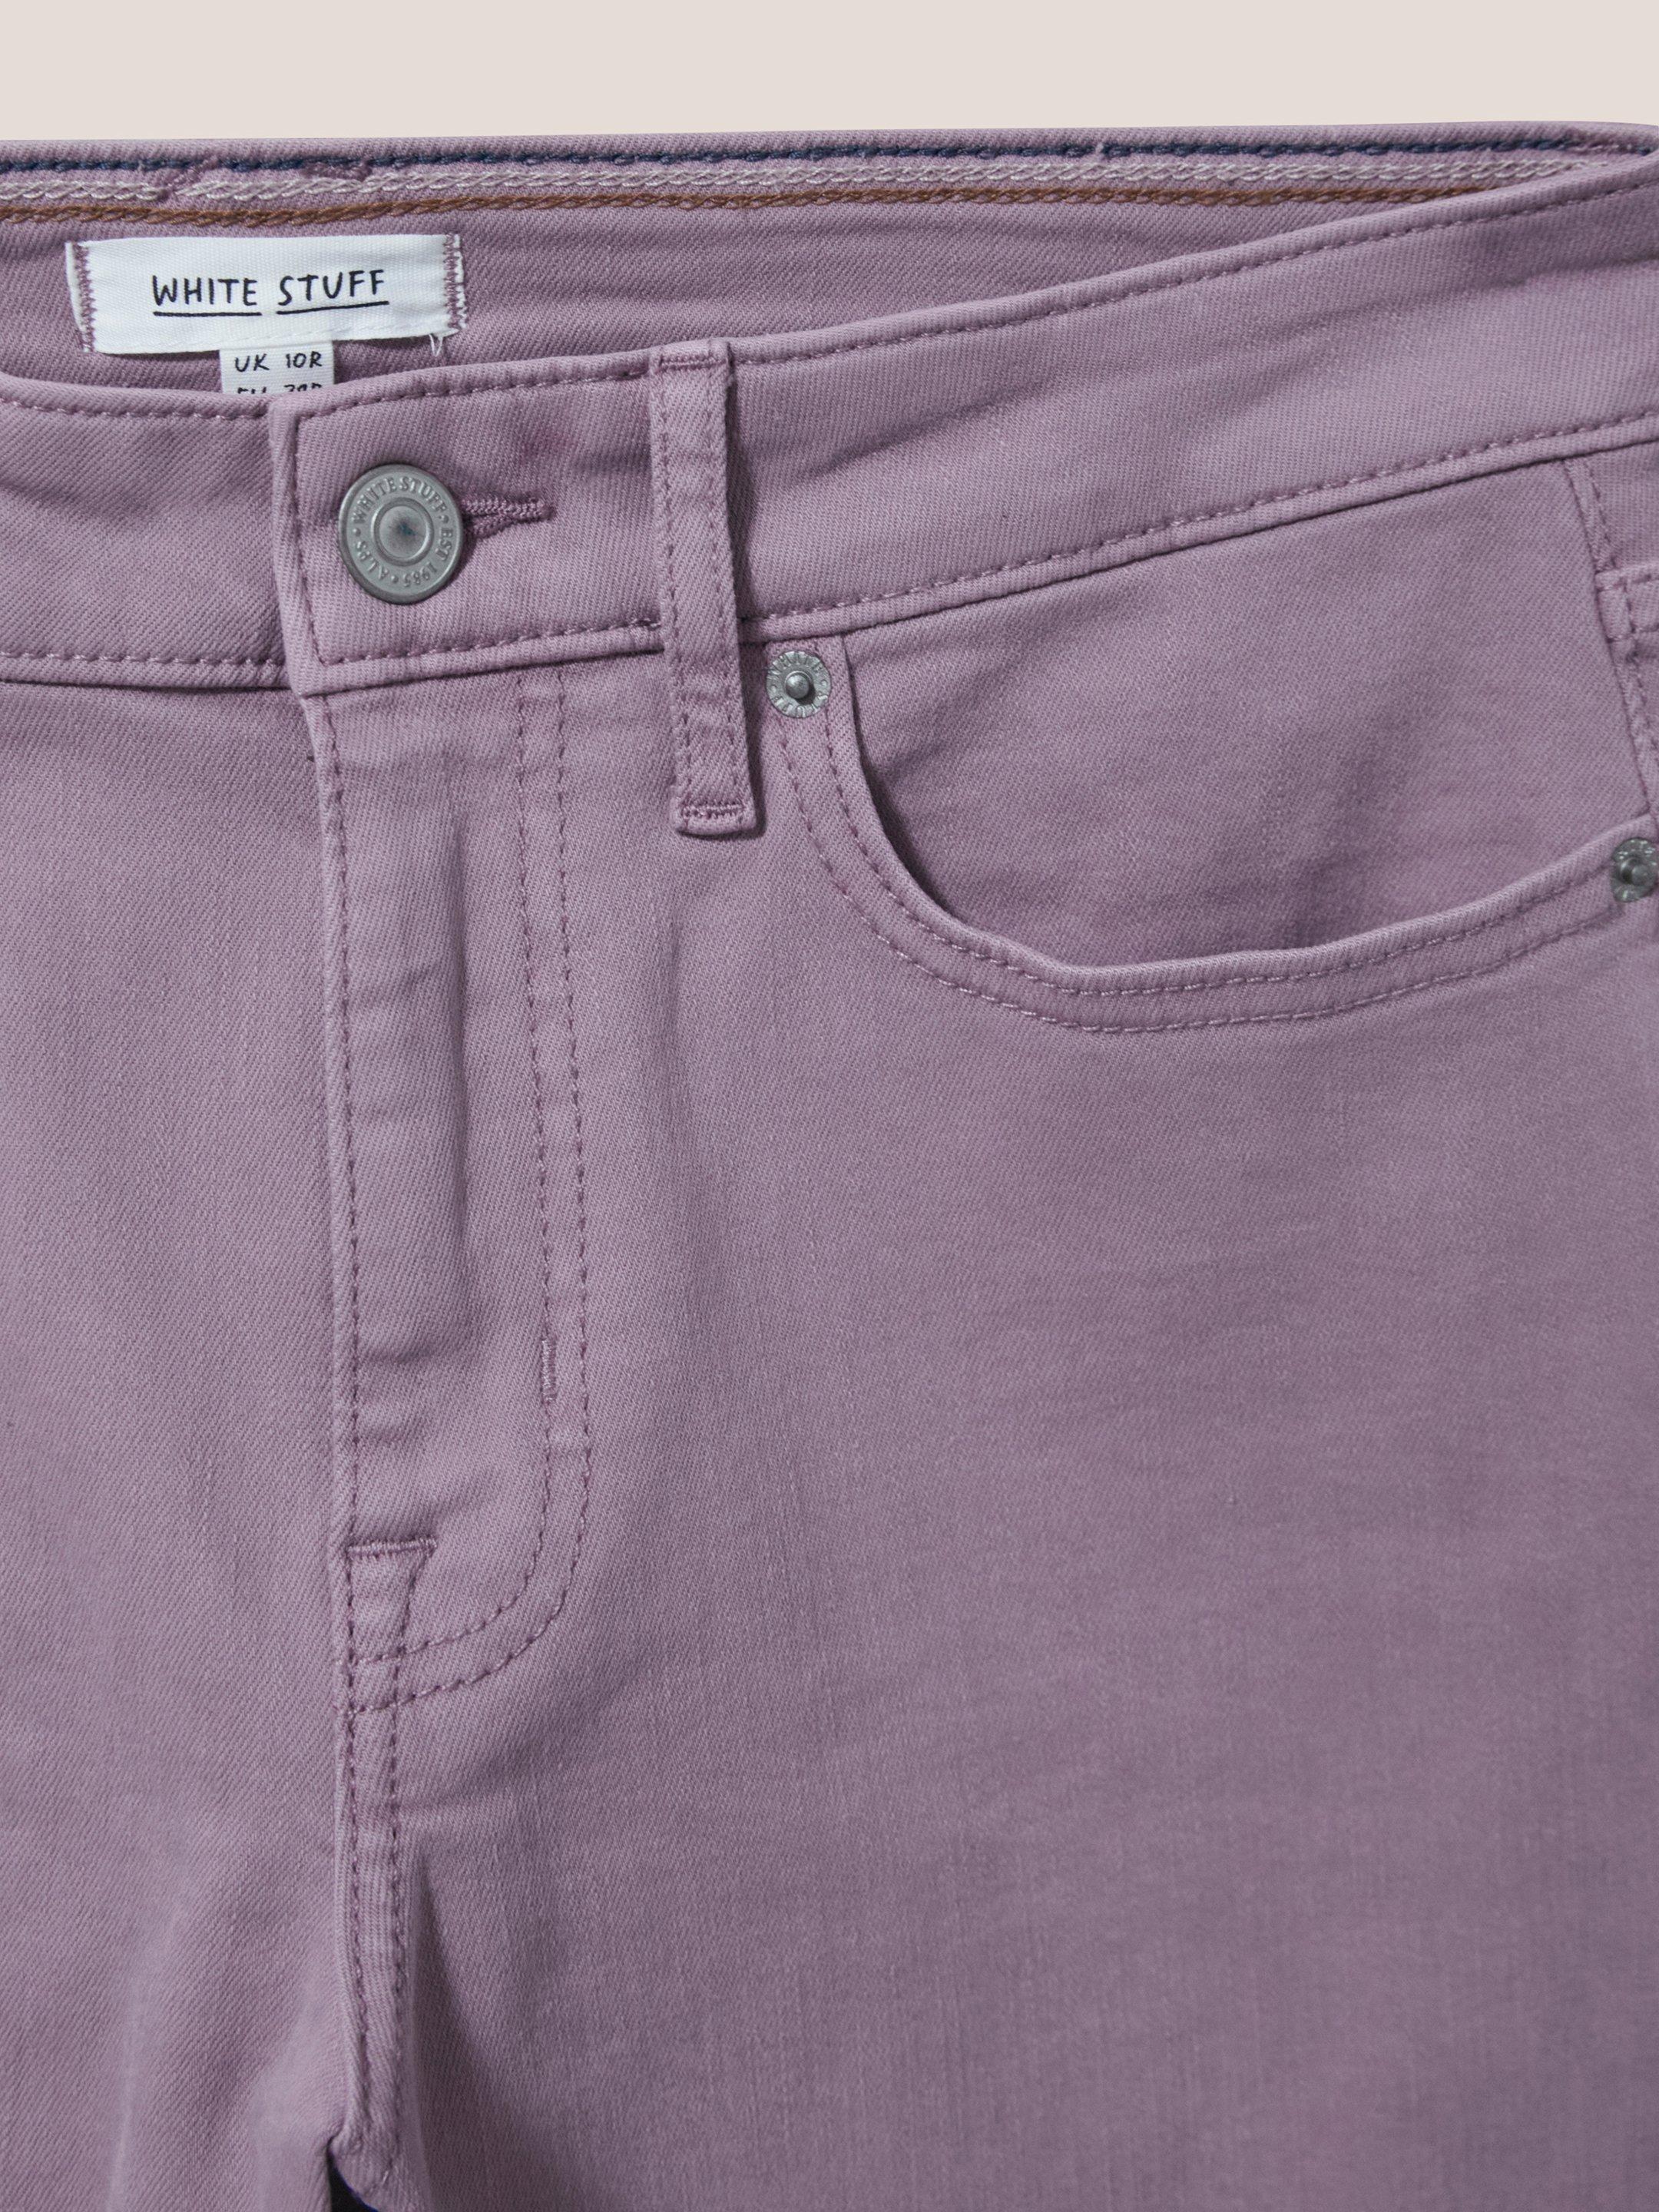 Blake Straight Crop Jeans in DUS PURPLE - FLAT DETAIL